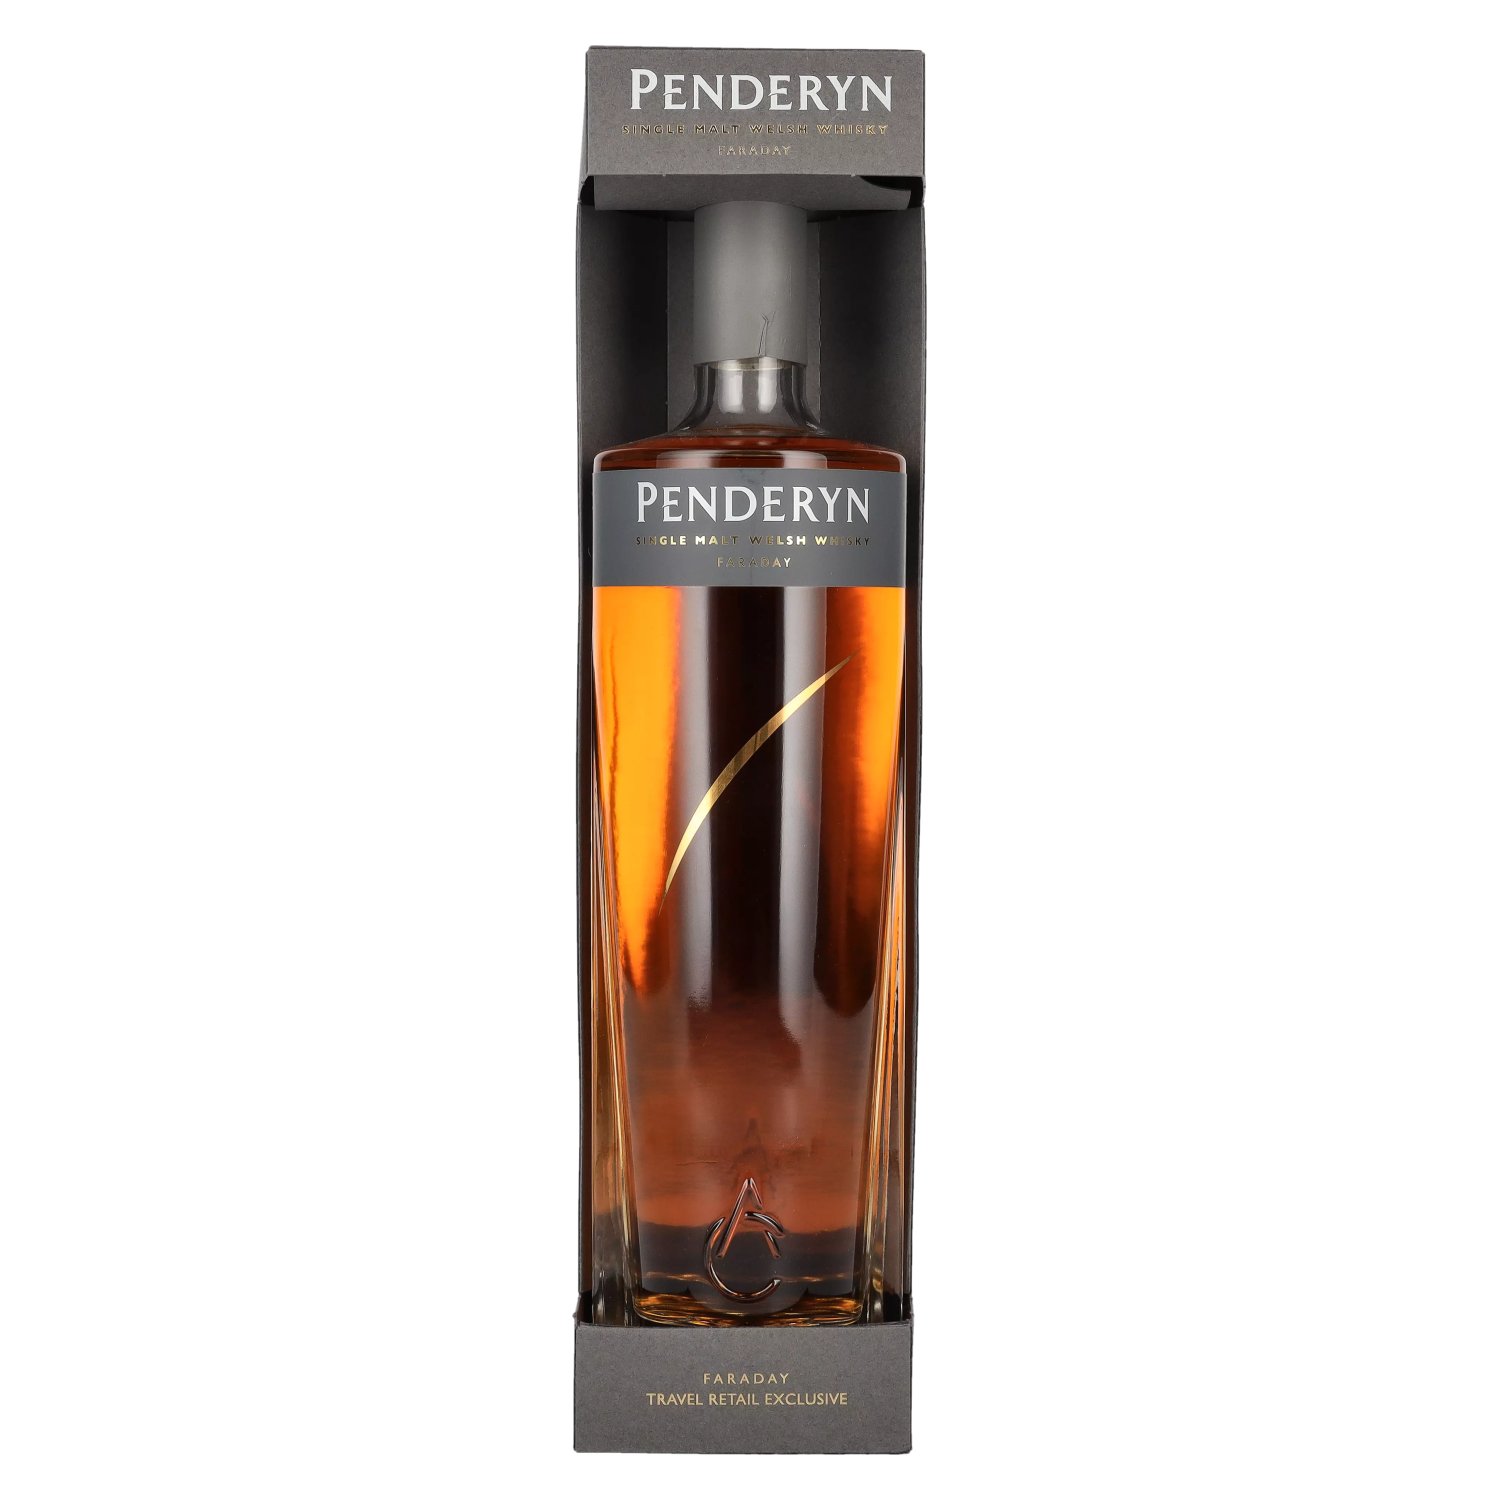 Penderyn FARADAY Travel Retail Exclusive 46% Vol. 0,7l in Geschenkbox | Whisky